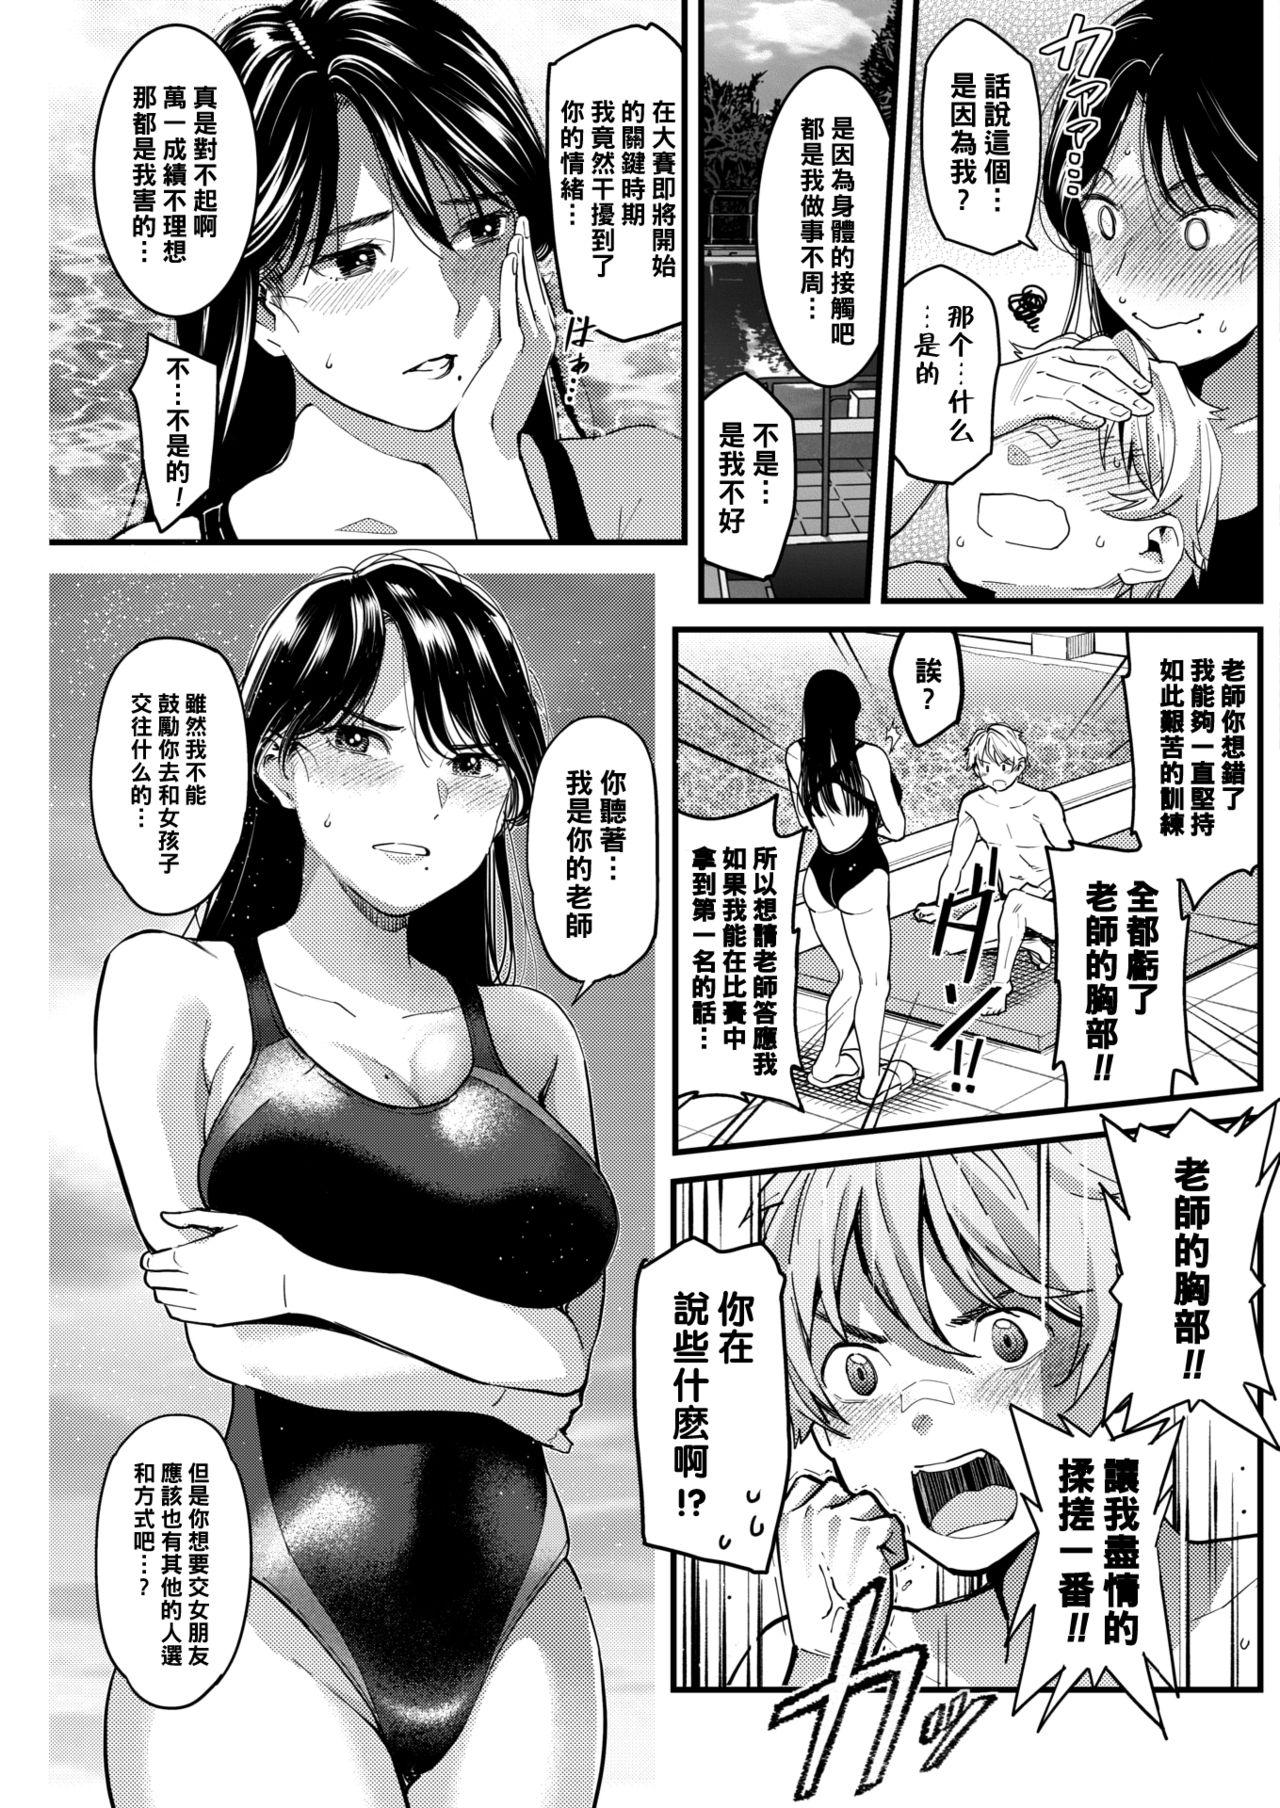 Ink Onegai! Minamosensei Girl Sucking Dick - Picture 3